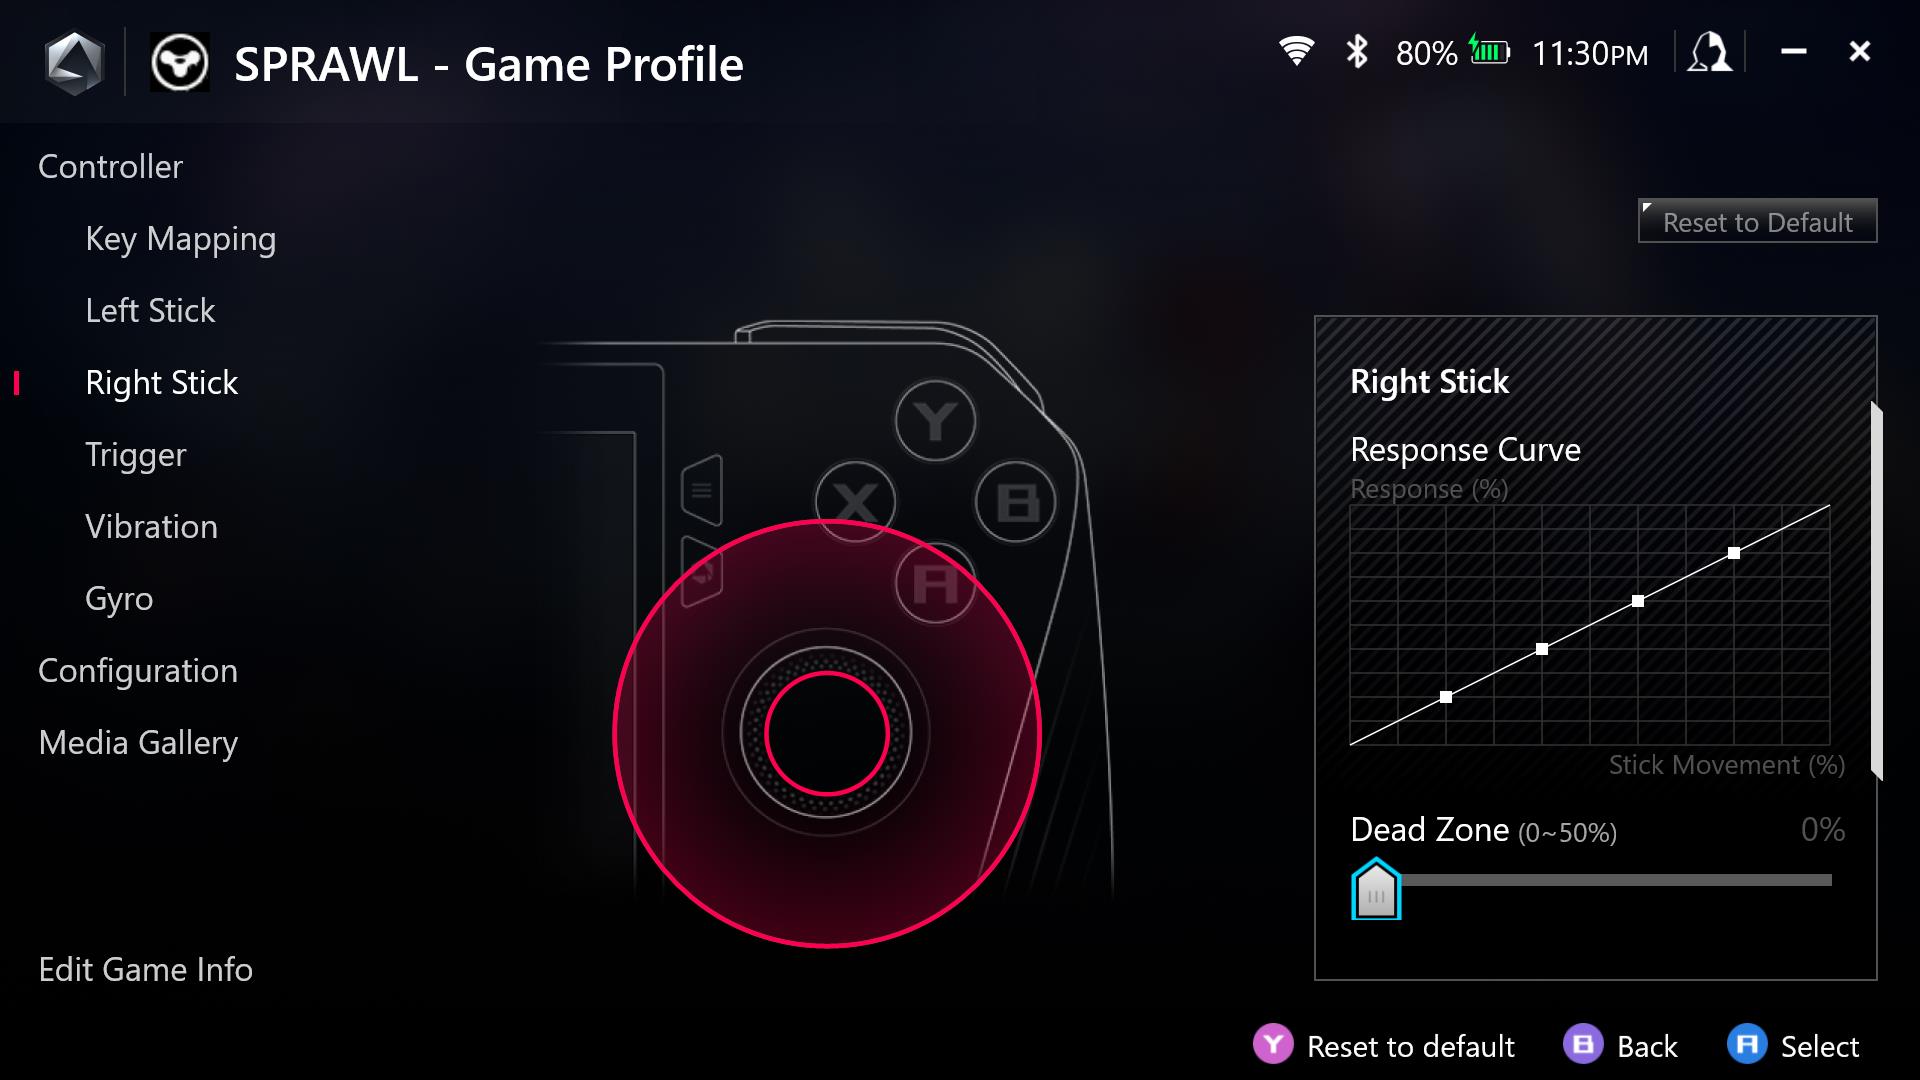 Response Curve game profile